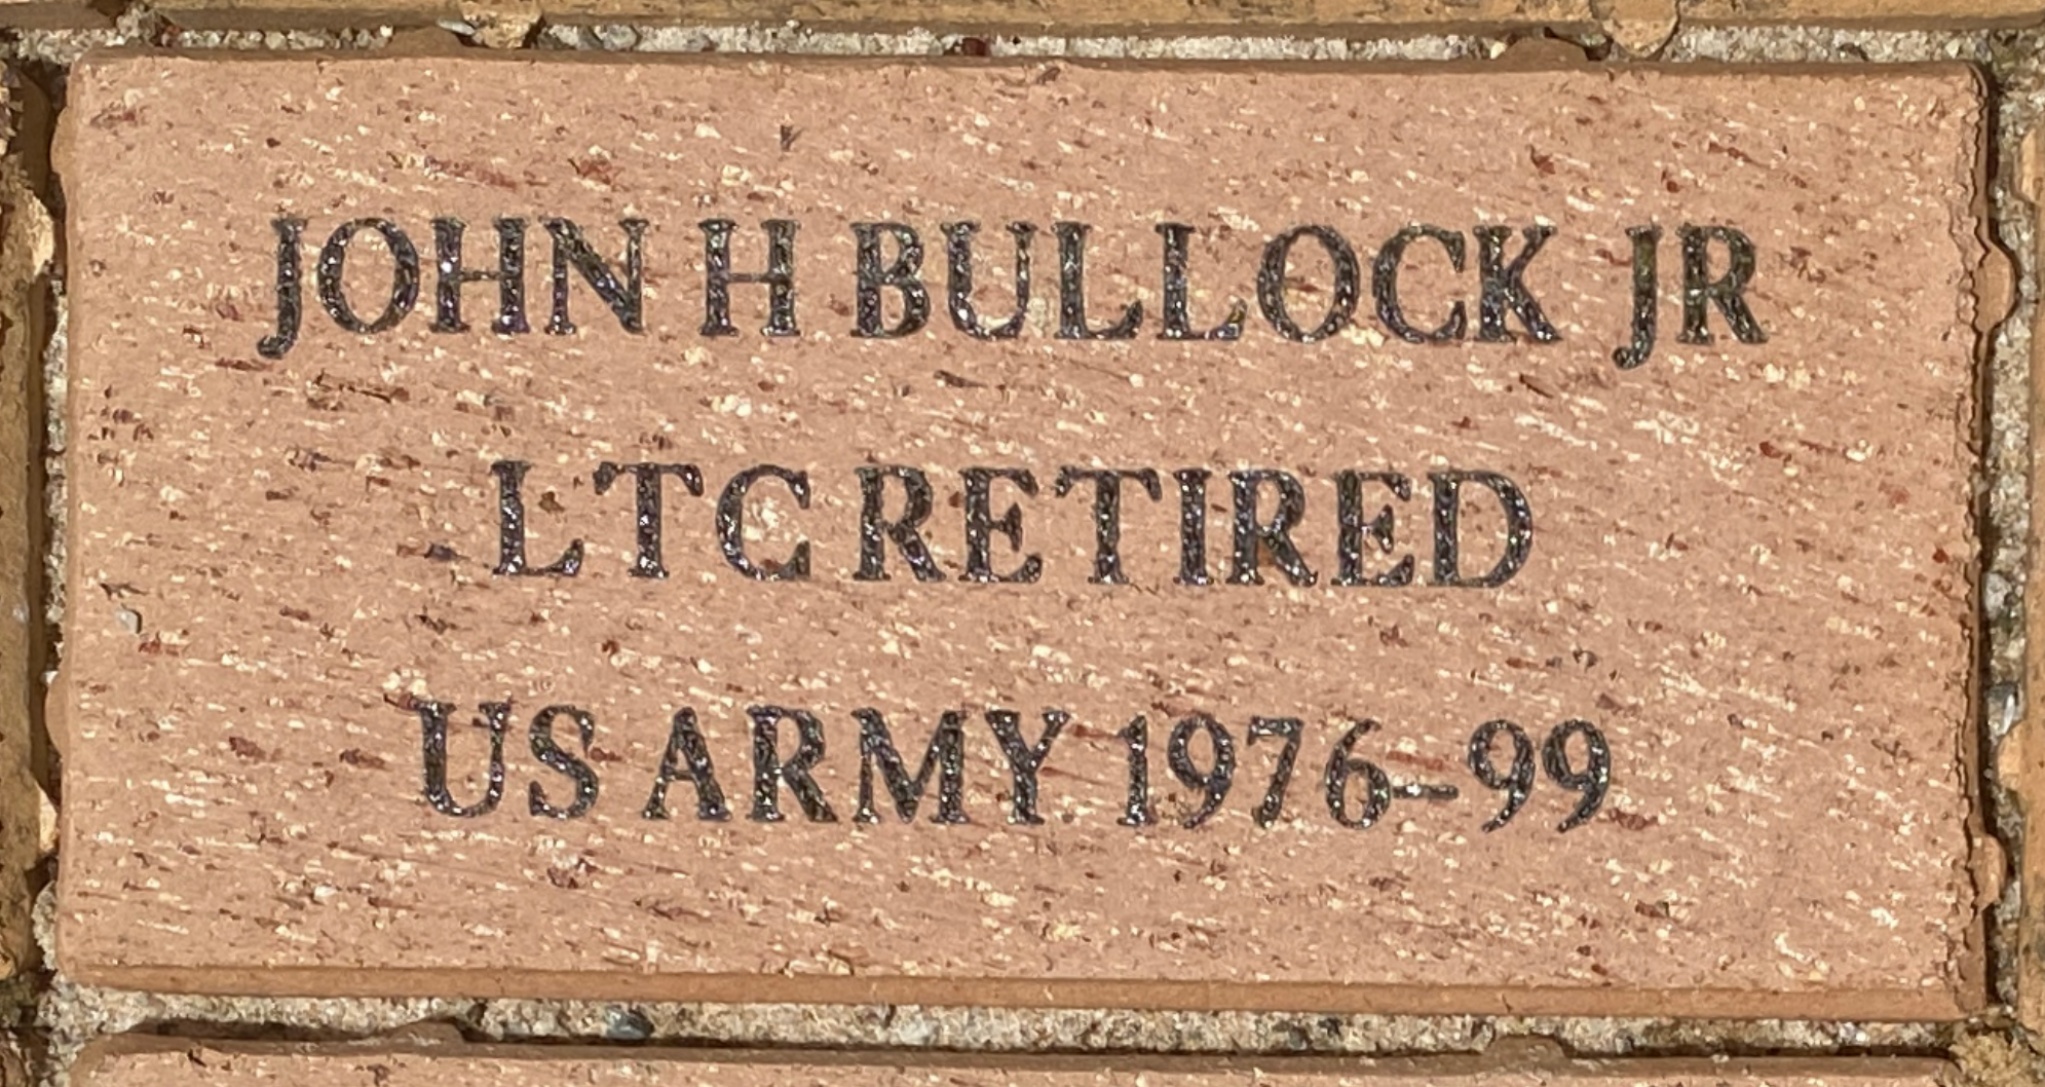 JOHN H BULLOCK JR LTC RETIRED US ARMY 1976-99